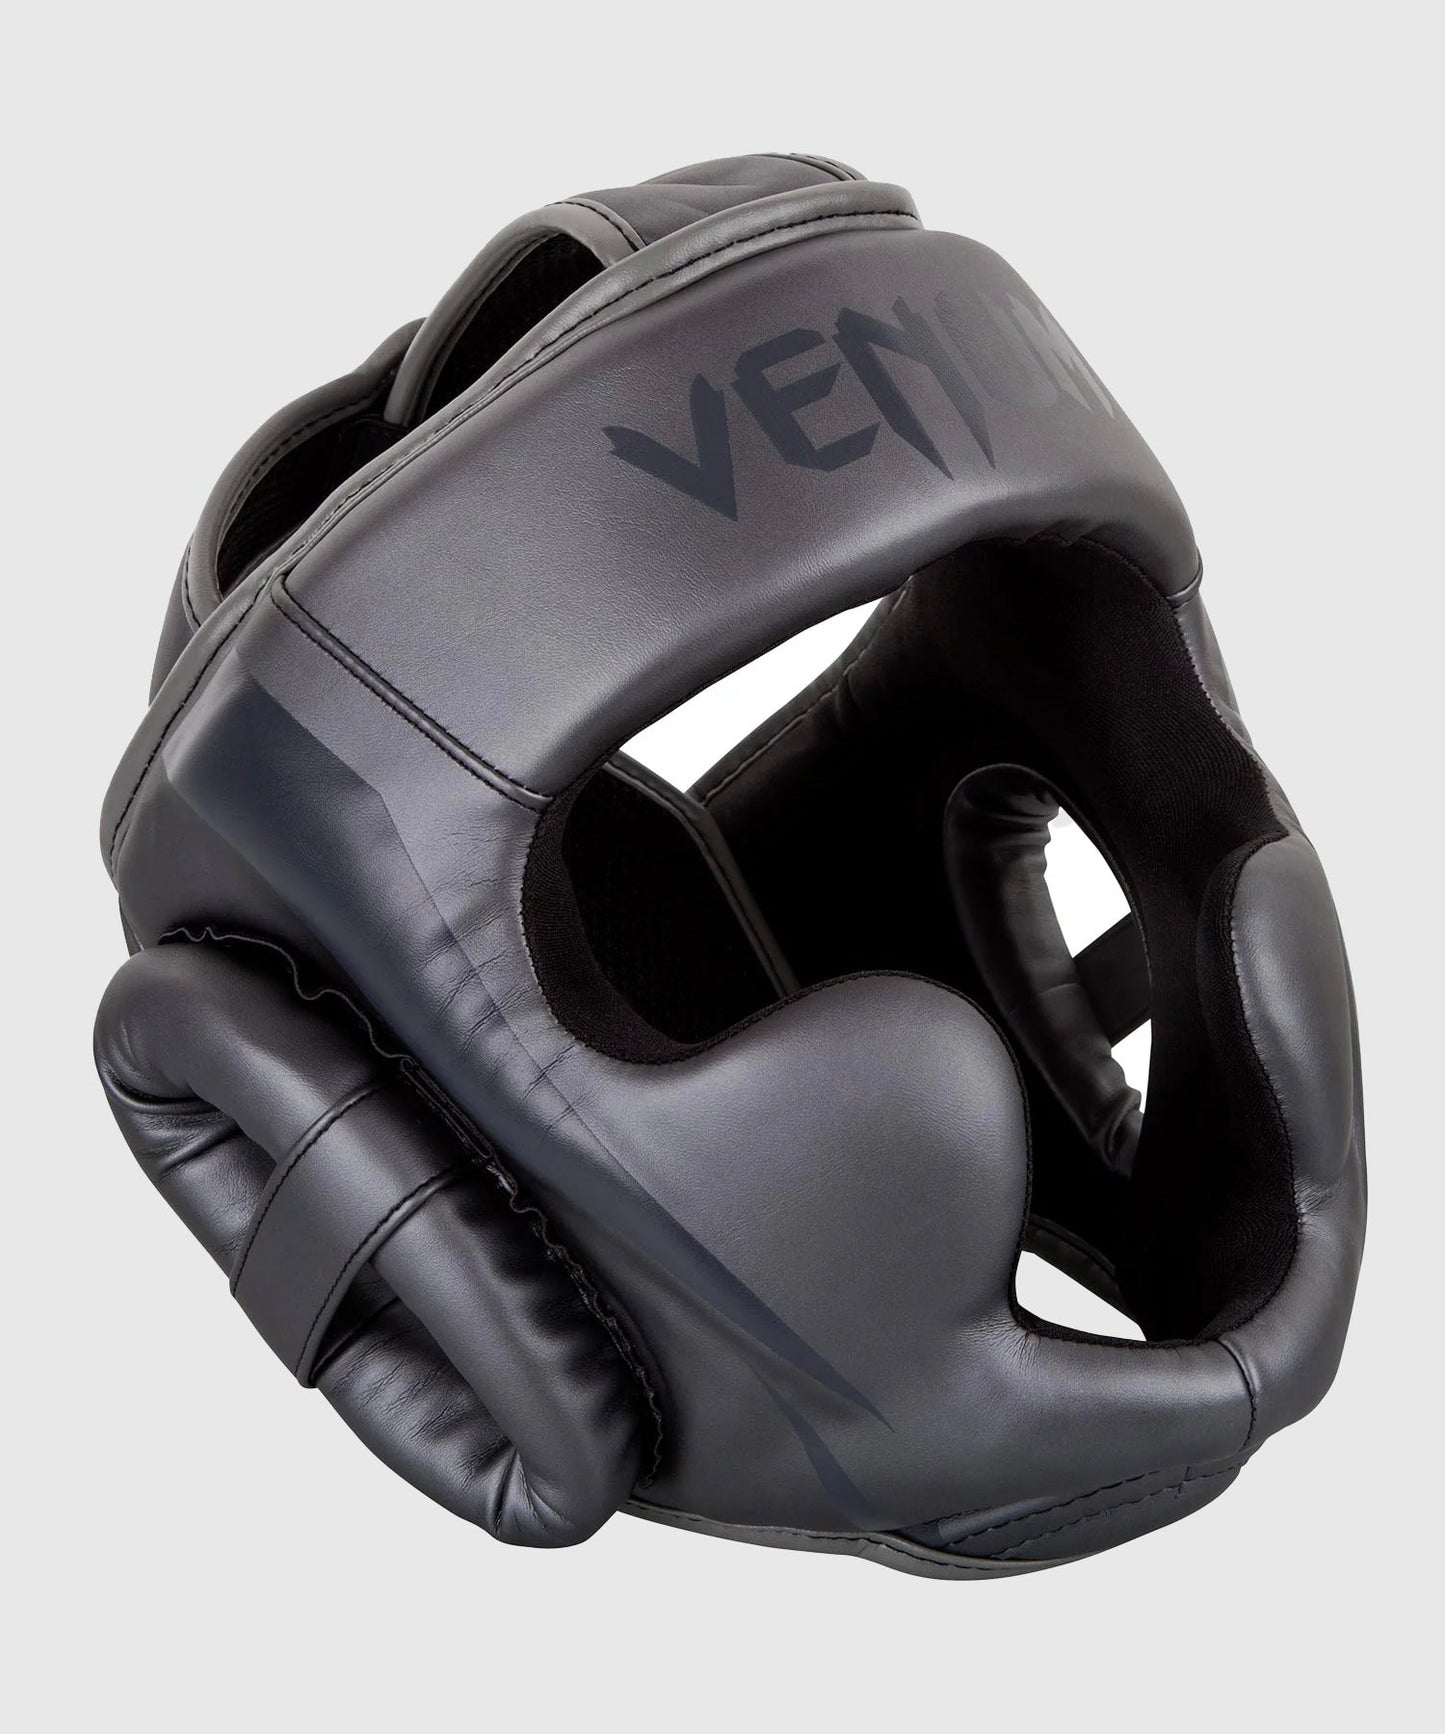 Venum Elite Kopfschutz - Grau/Grau